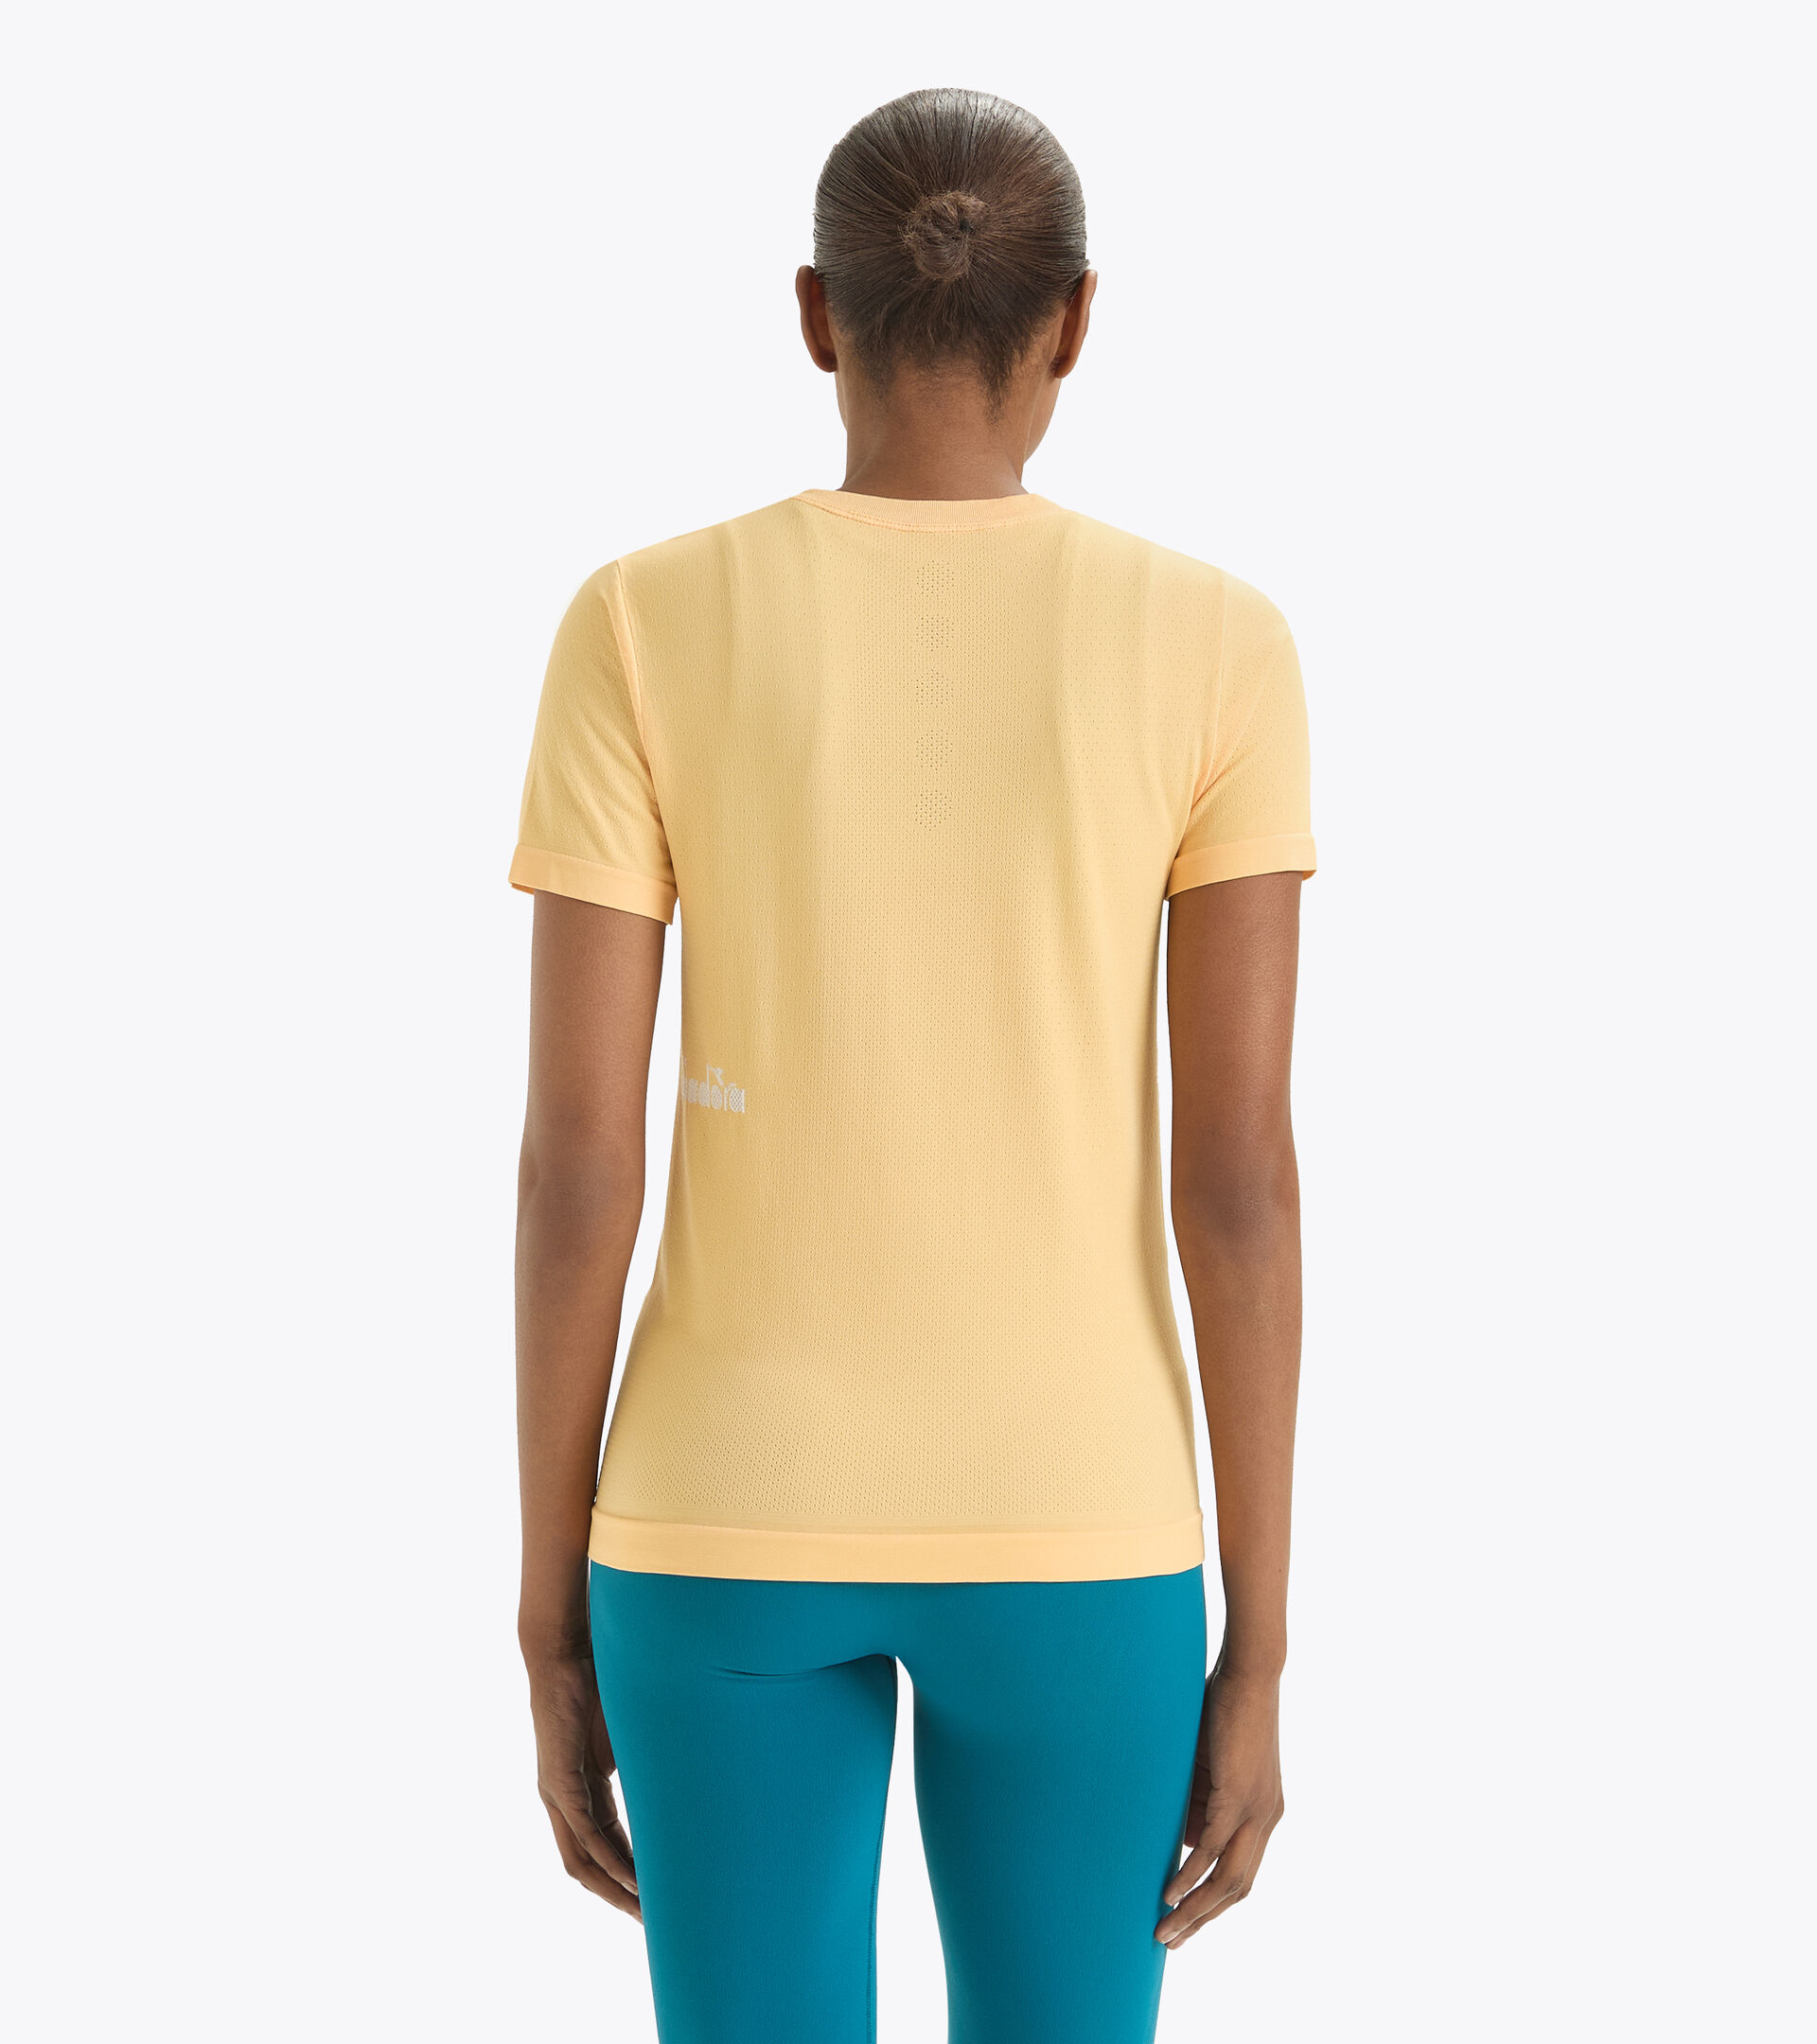 Camiseta de running sin costuras - Made in Italy - Mujer L. SS T-SHIRT SKIN FRIENDLY AMARILLO CALENDULA CLARO - Diadora